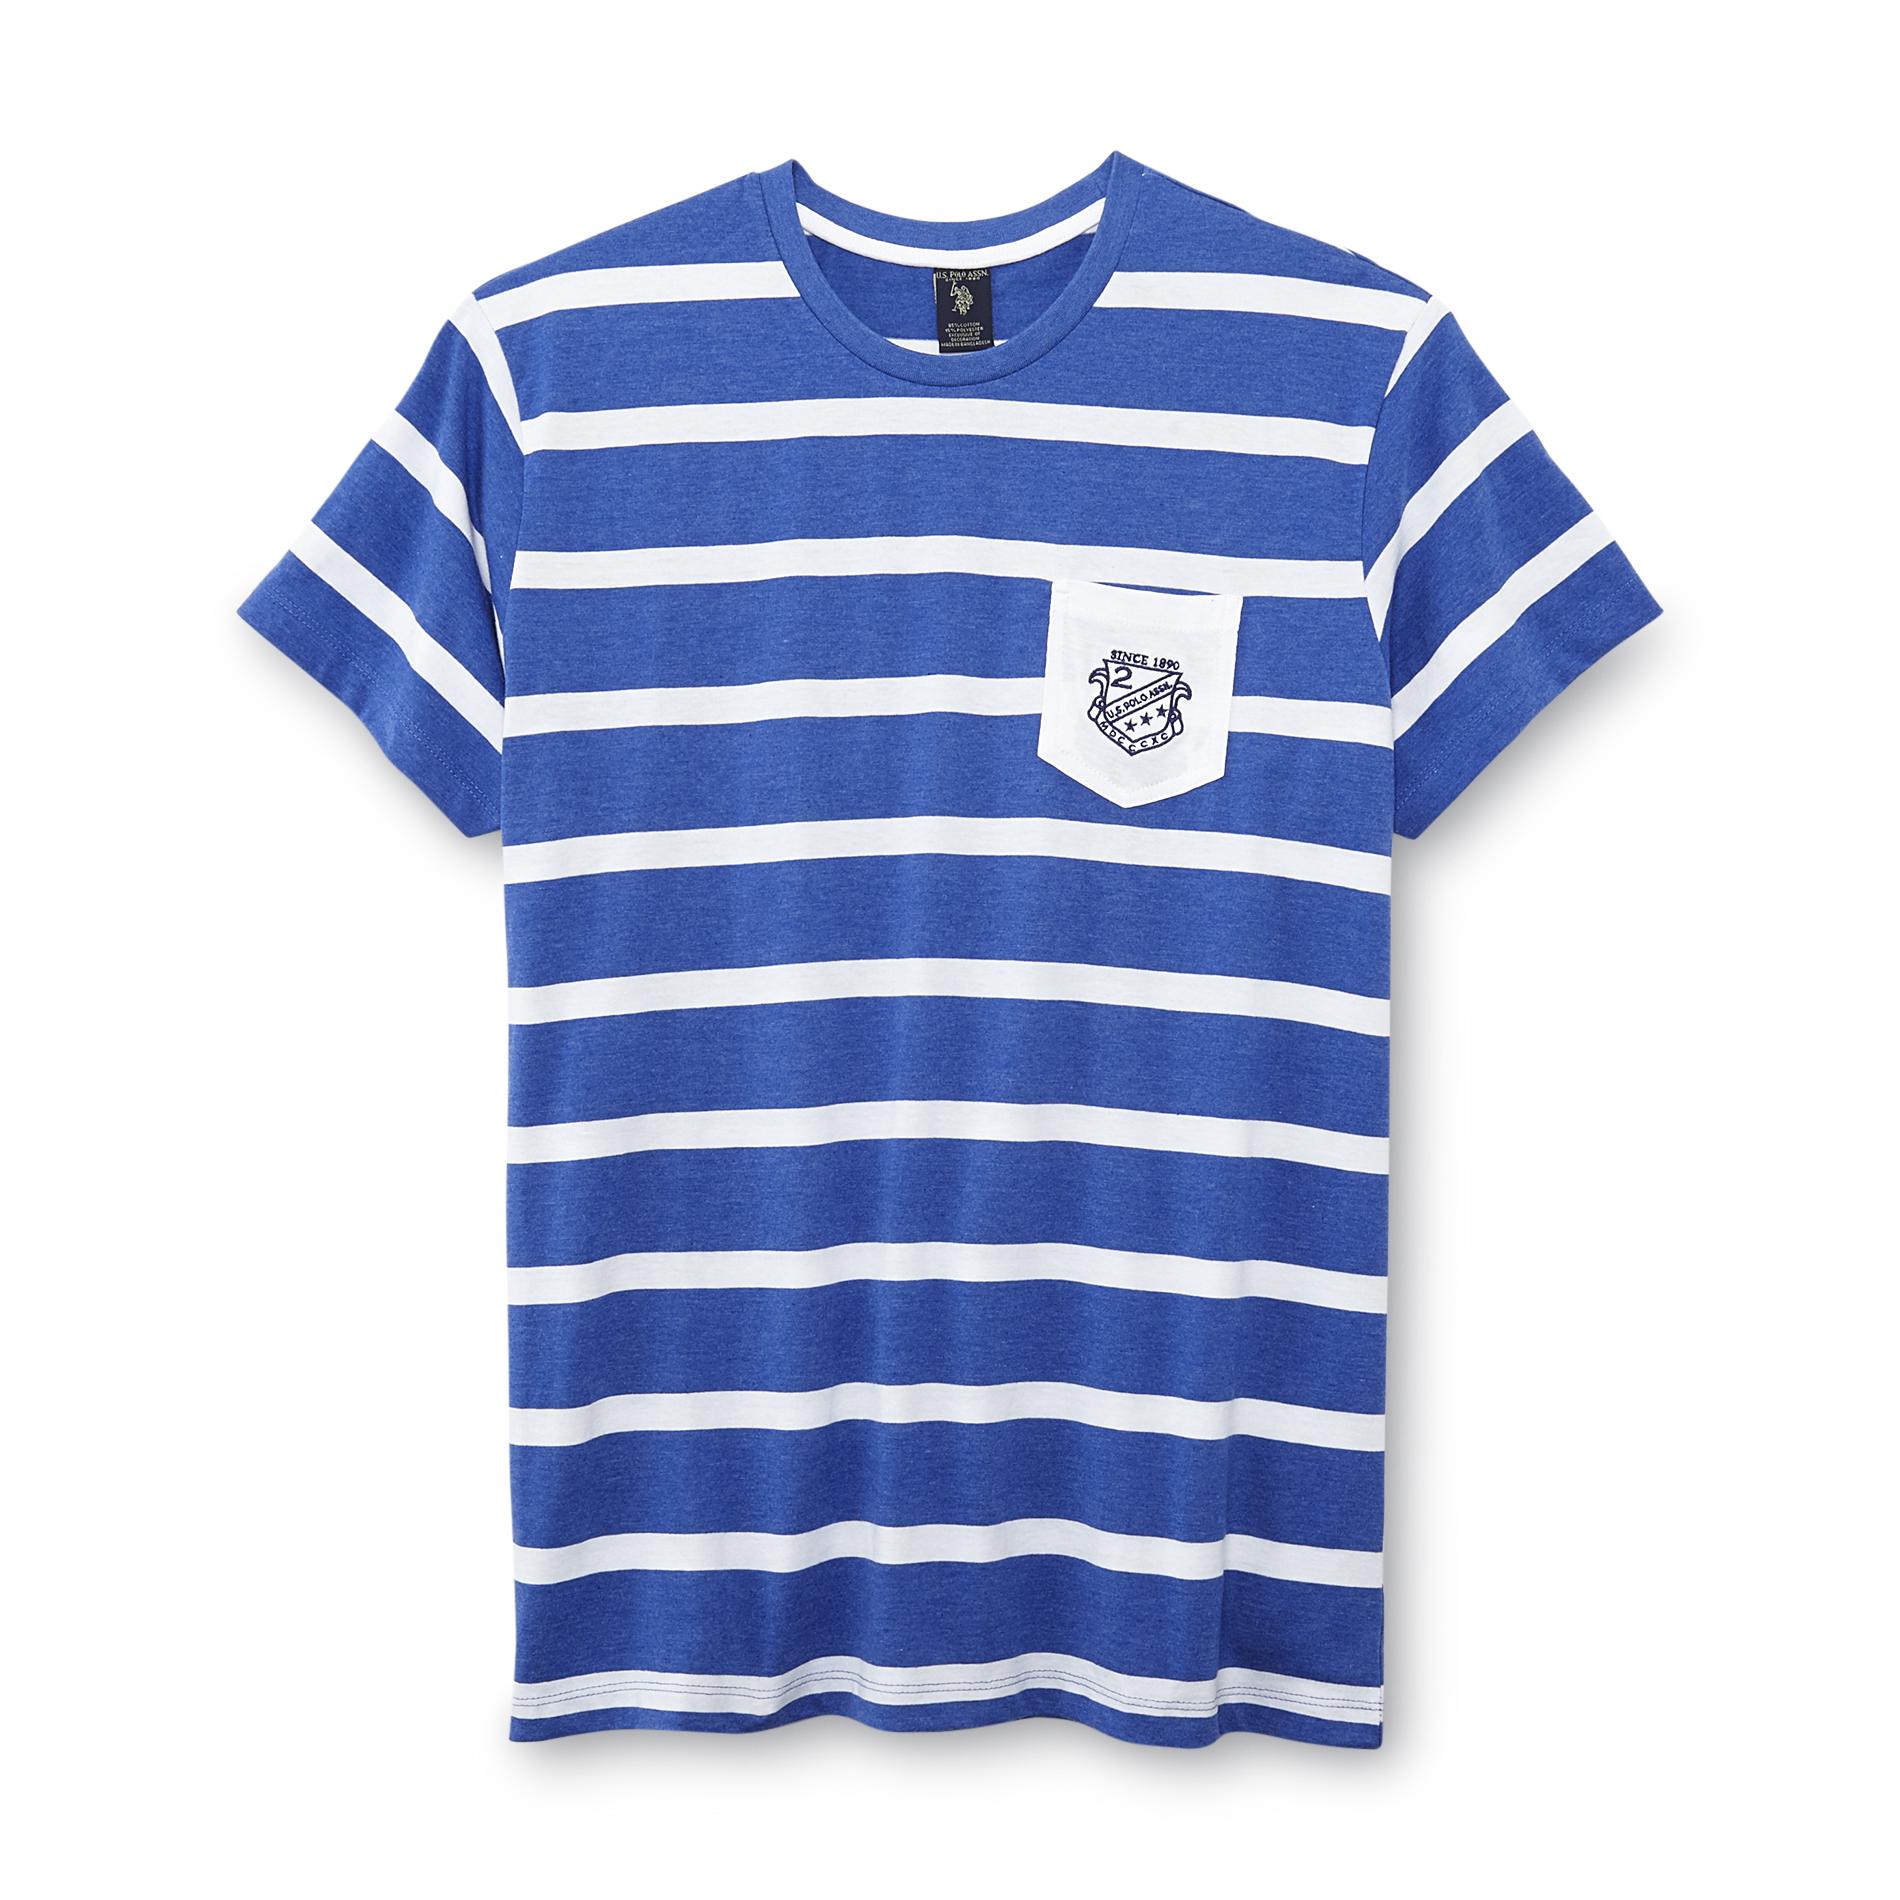 U.S. Polo Assn. Men's T-Shirt - Striped